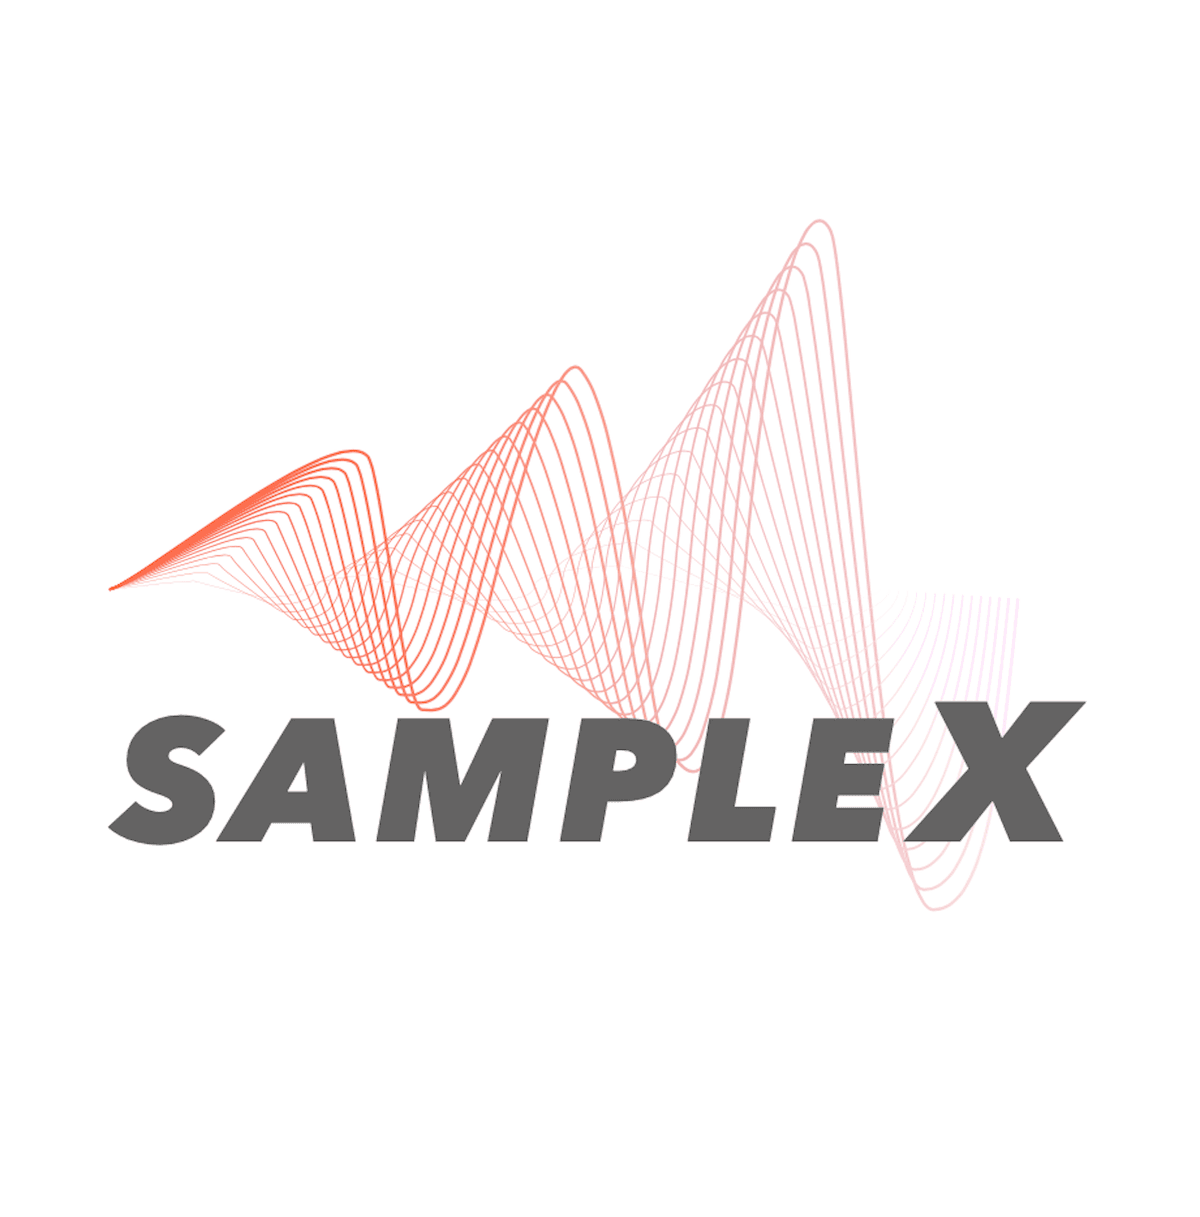 Sample_X バナー